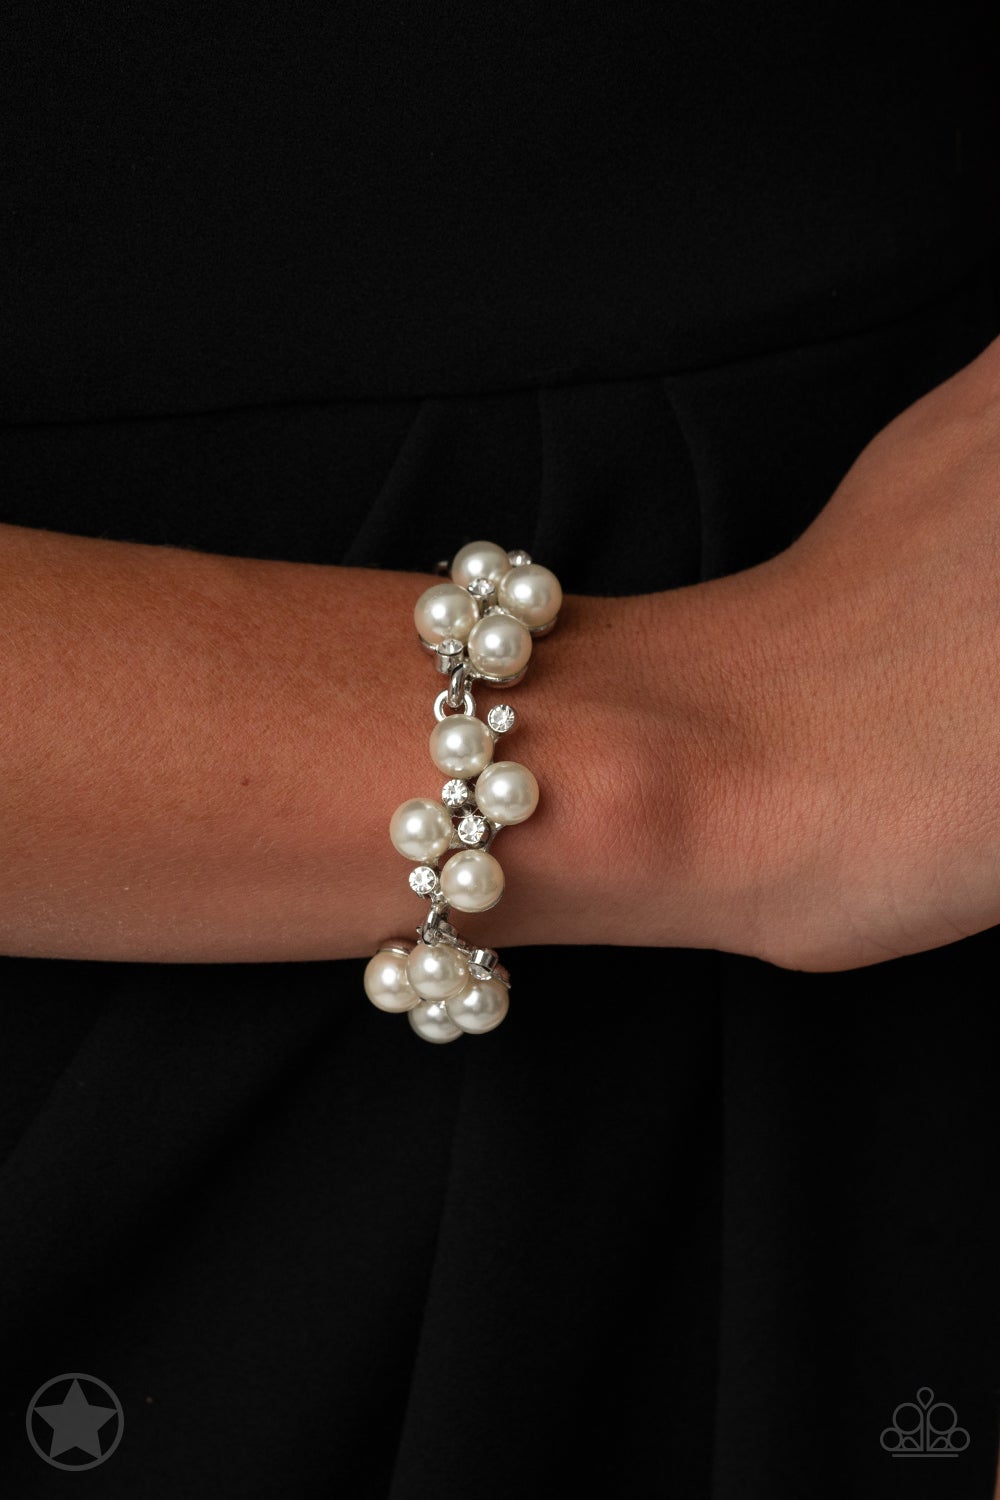 I Do - White Pearl Bracelet - Paparazzi Accessories - model -CarasShop.com - $5 Jewelry by Cara Jewels